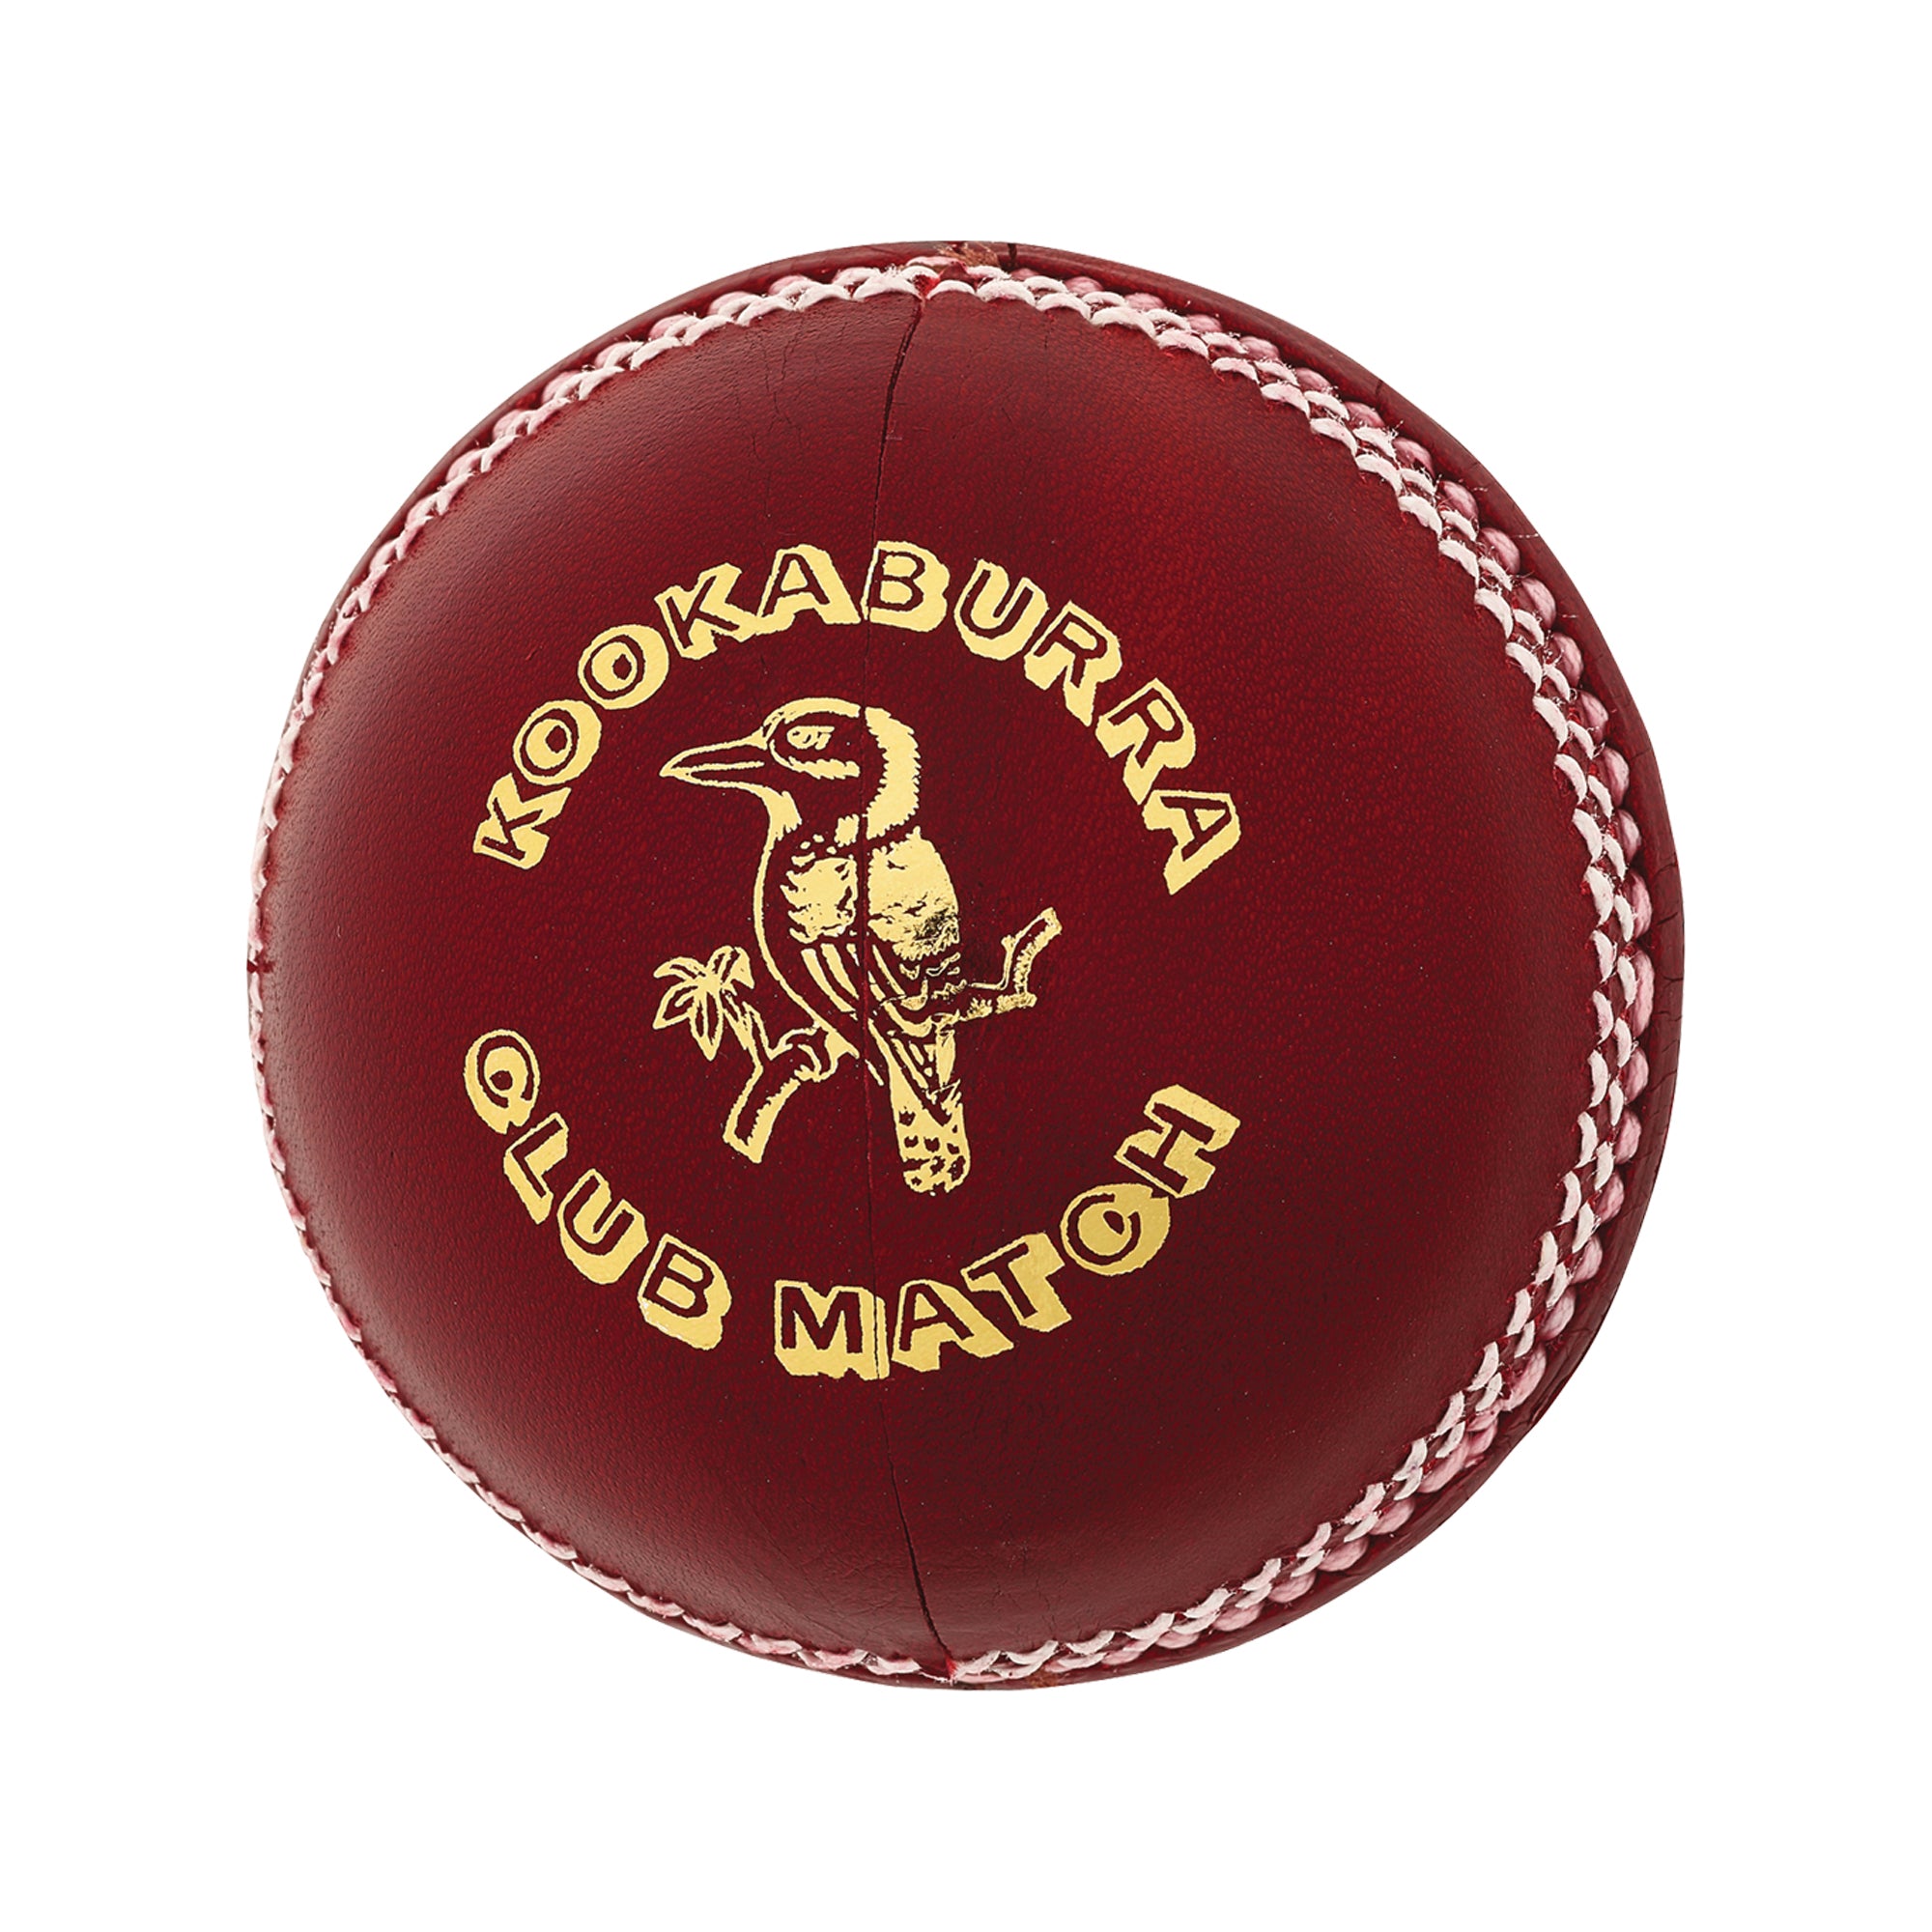 Kookaburra Club Match 4 Piece Red Cricket ball